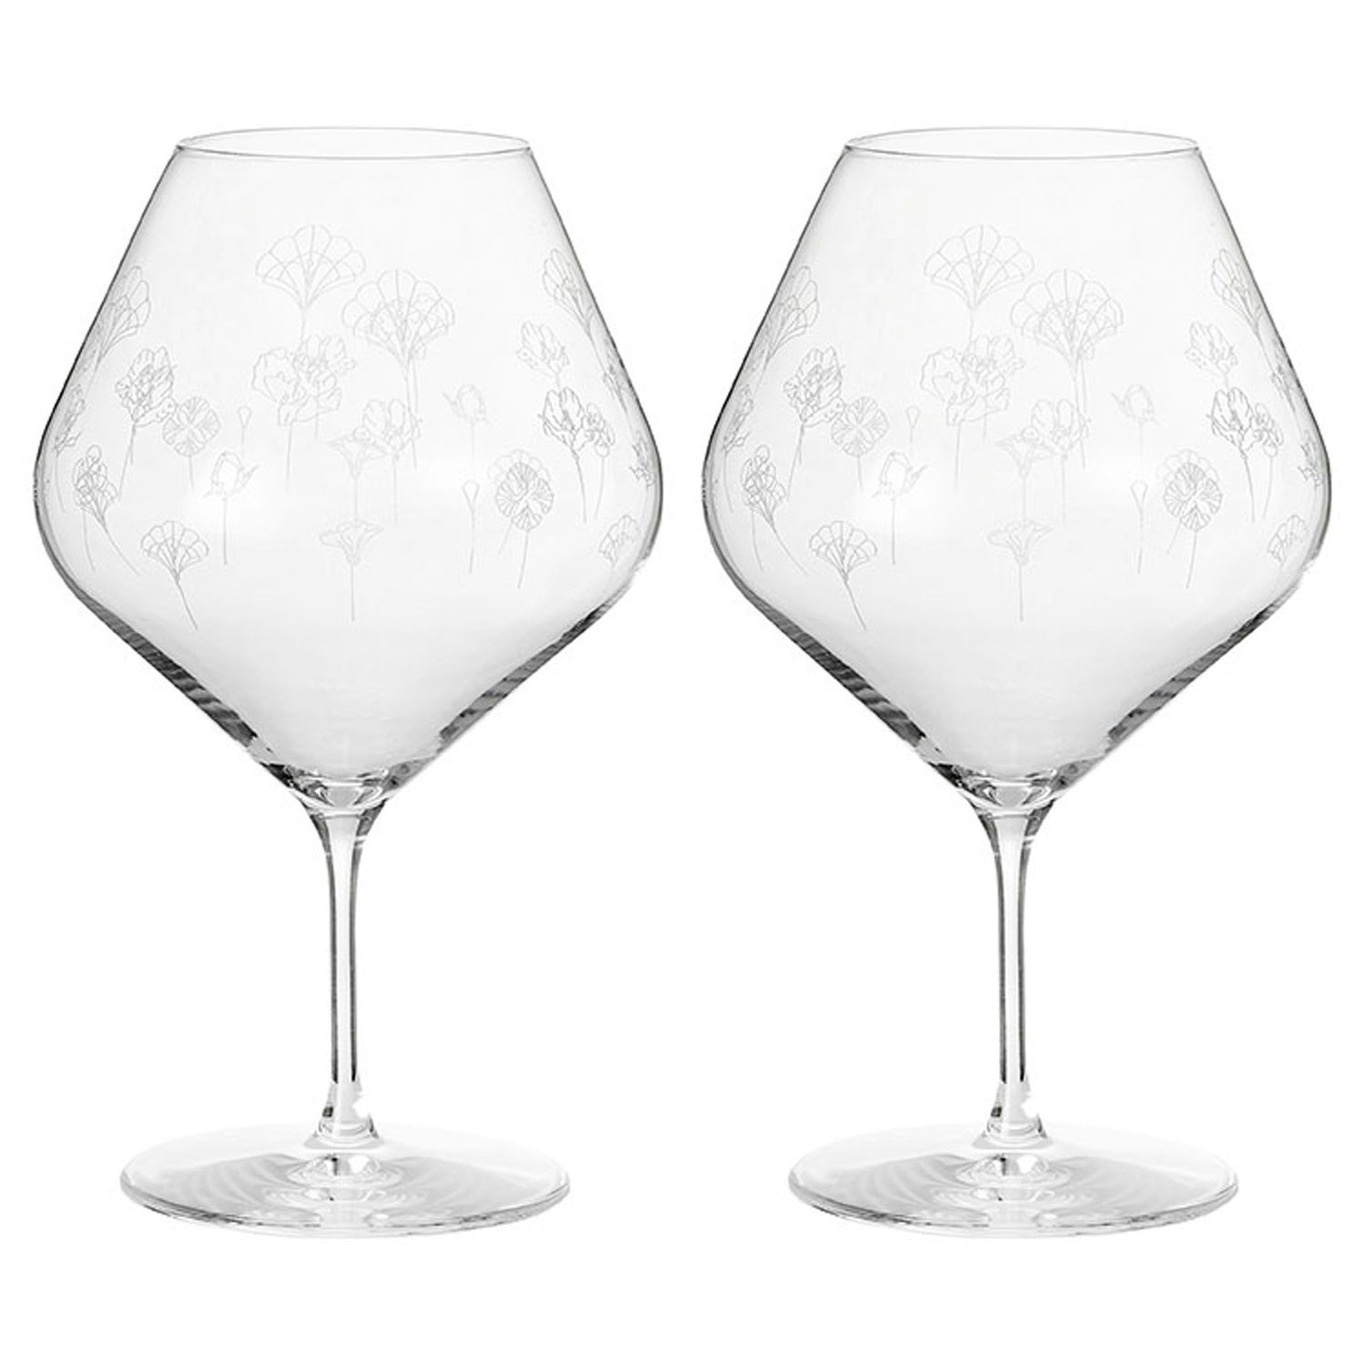 https://royaldesign.com/image/2/frederik-bagger-flower-wine-glass-2-pack-xl-89-cl-0?w=800&quality=80